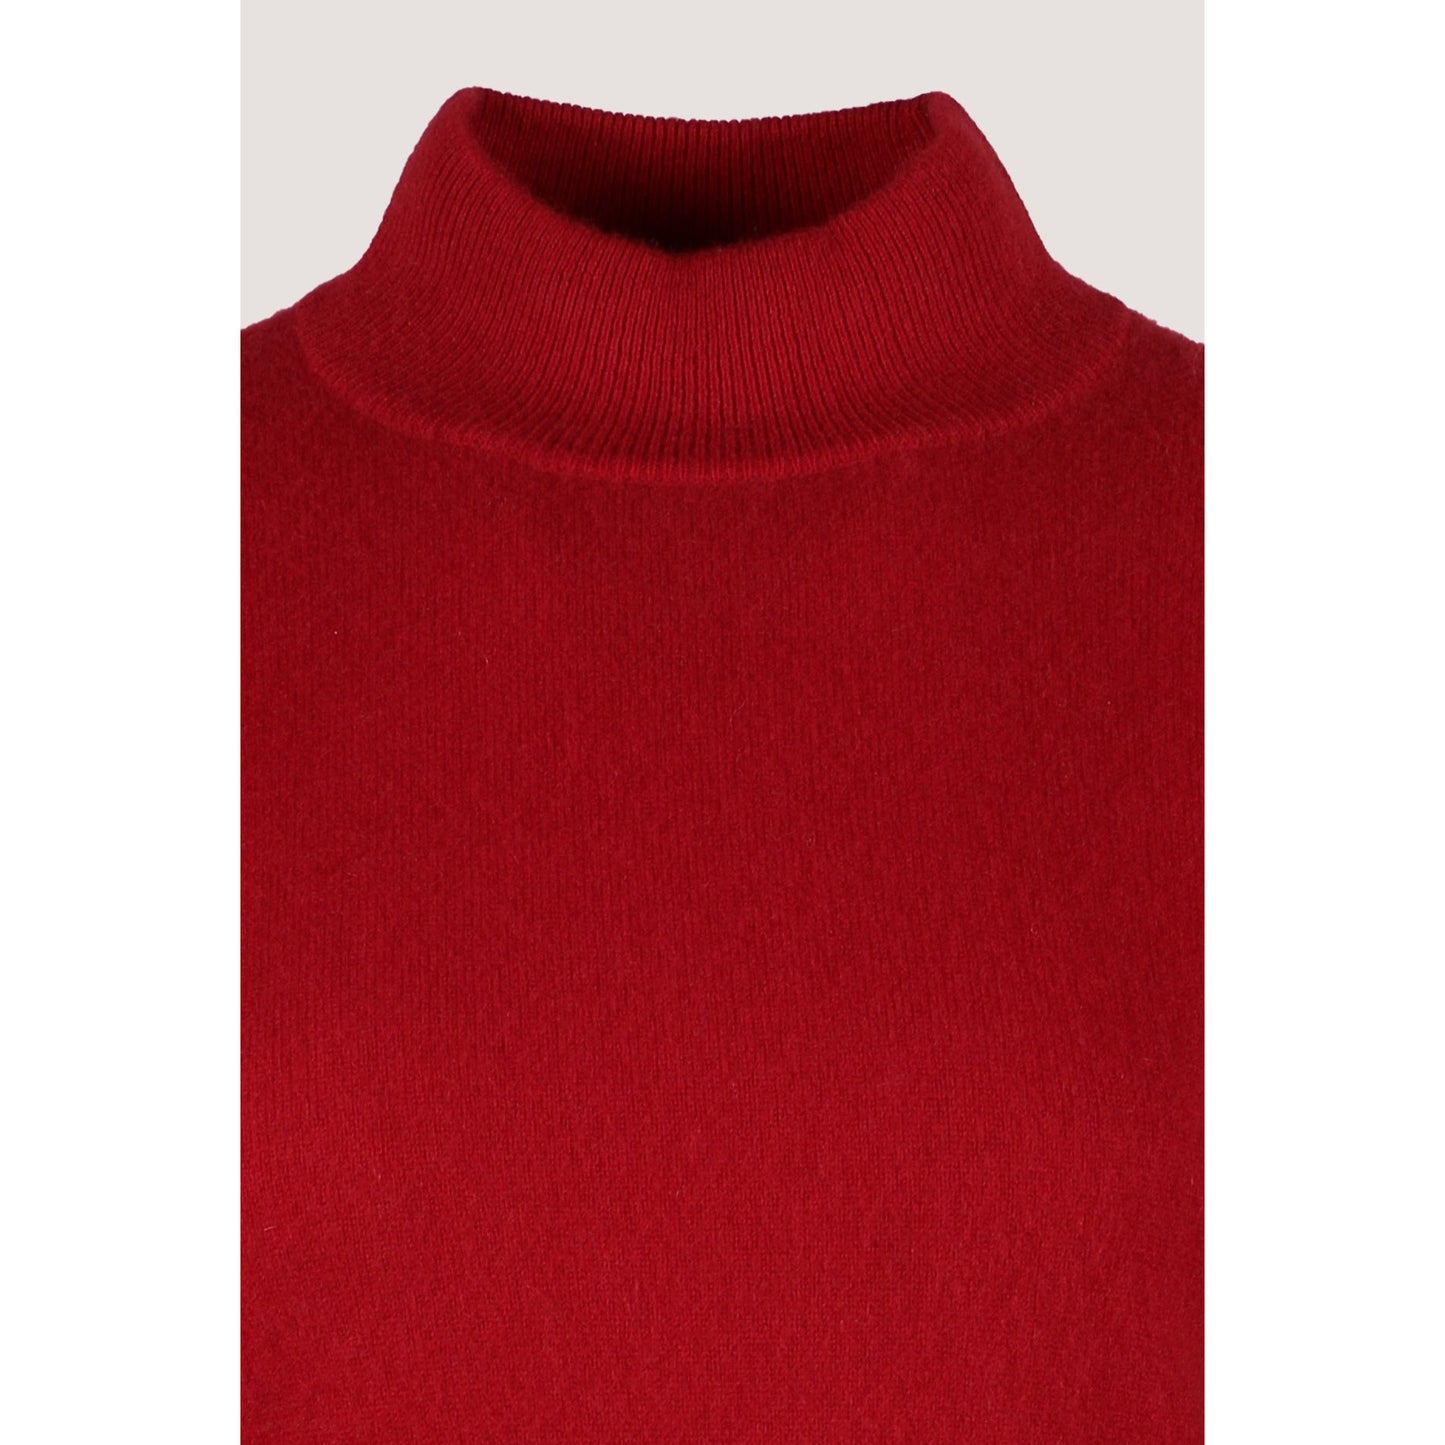 Half Roll Neck Sweater Red - Crumpet Chowk